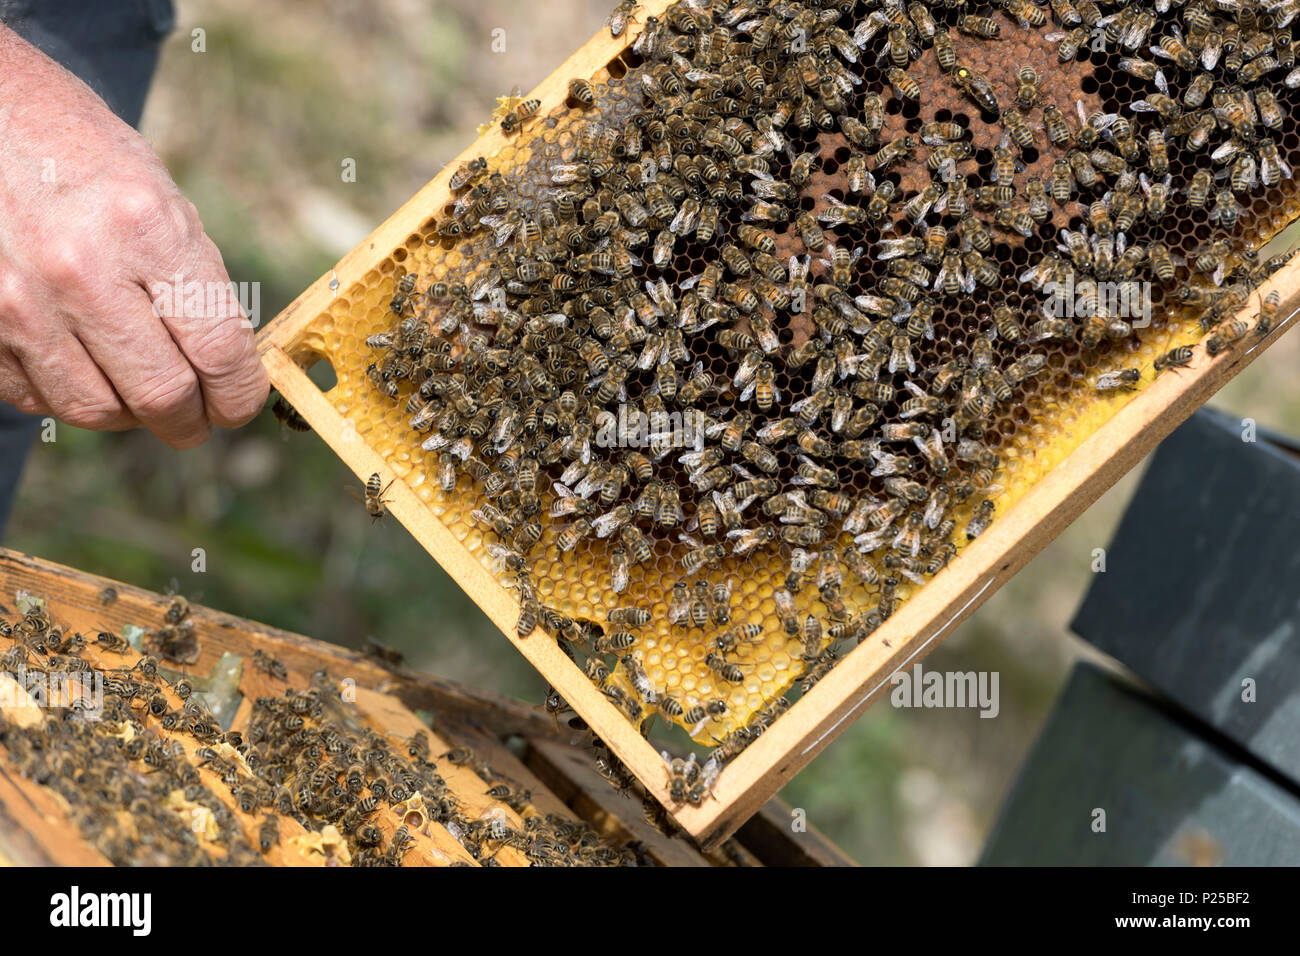 Bees, Italy, Trentino Alto-Adige, beekeeper, Apis mellifera Stock Photo